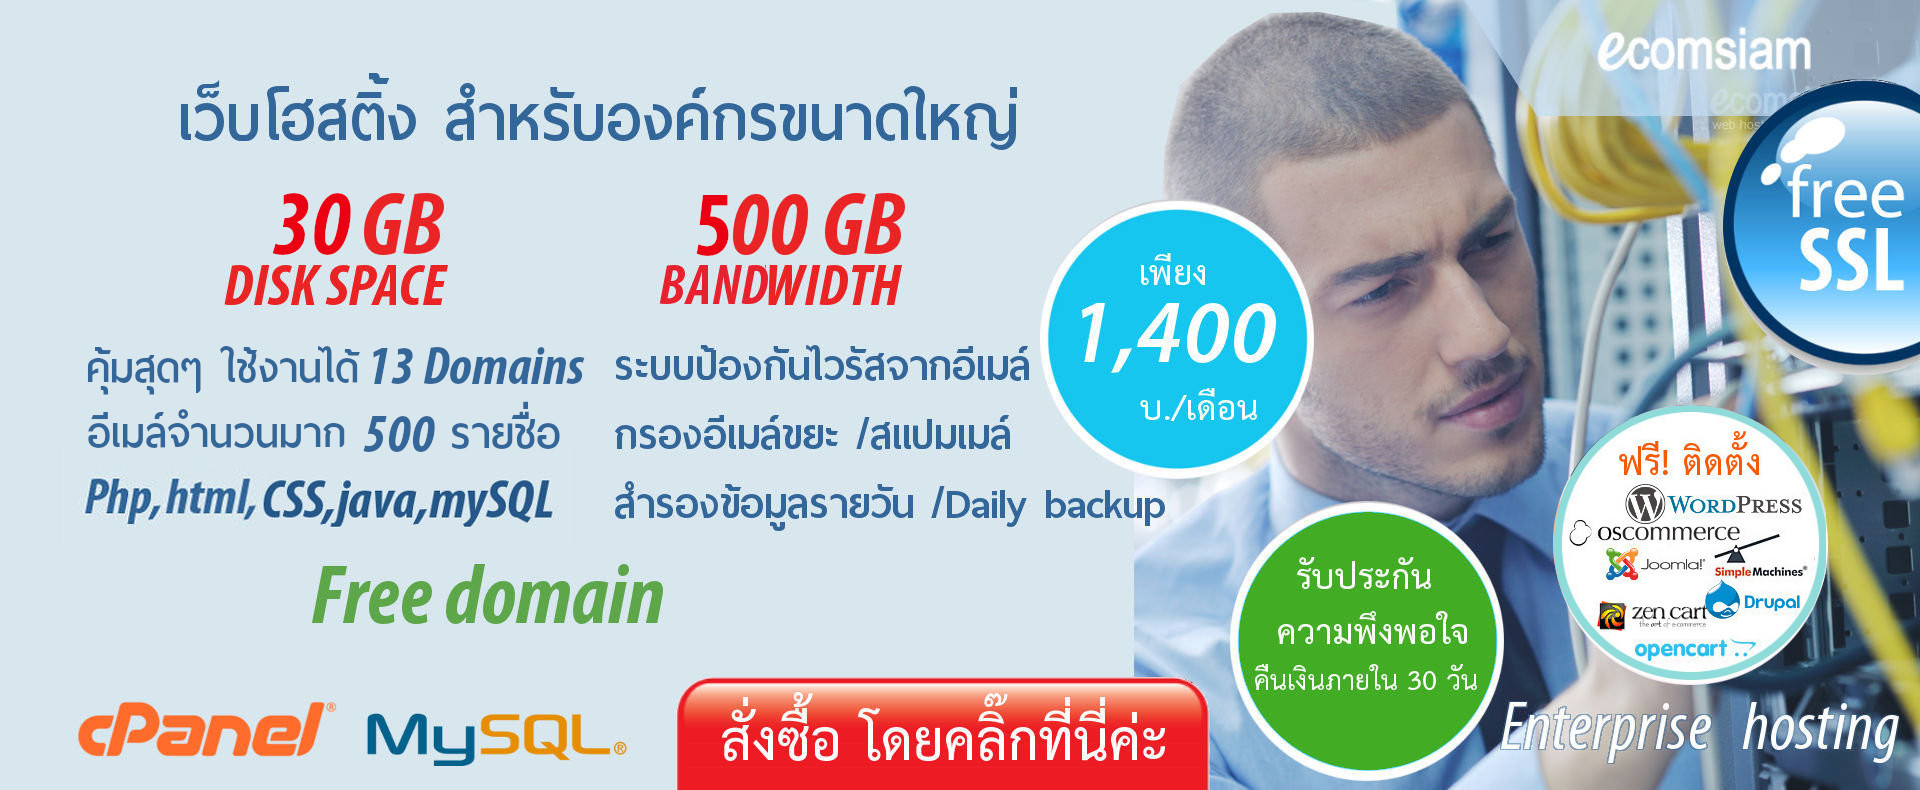 webhostthai web hosting thailand แนะนำ Enterprise web hosting thailand เว็บโฮสต์ติ้งสำหรับองค์กรขนาดใหญ่ สำหรับใช้งานโดเมนจำนวนมาก ราคาเพียง 1,400 บ./เดือน เว็บโฮสติ้งไทย ฟรี โดเมน ฟรี SSL ฟรีติดตั้ง แนะนำเว็บโฮสติ้ง บริการลูกค้า  Support ดูแลดี โดย webhostthai.com - enterprise web hosting thailand free domain